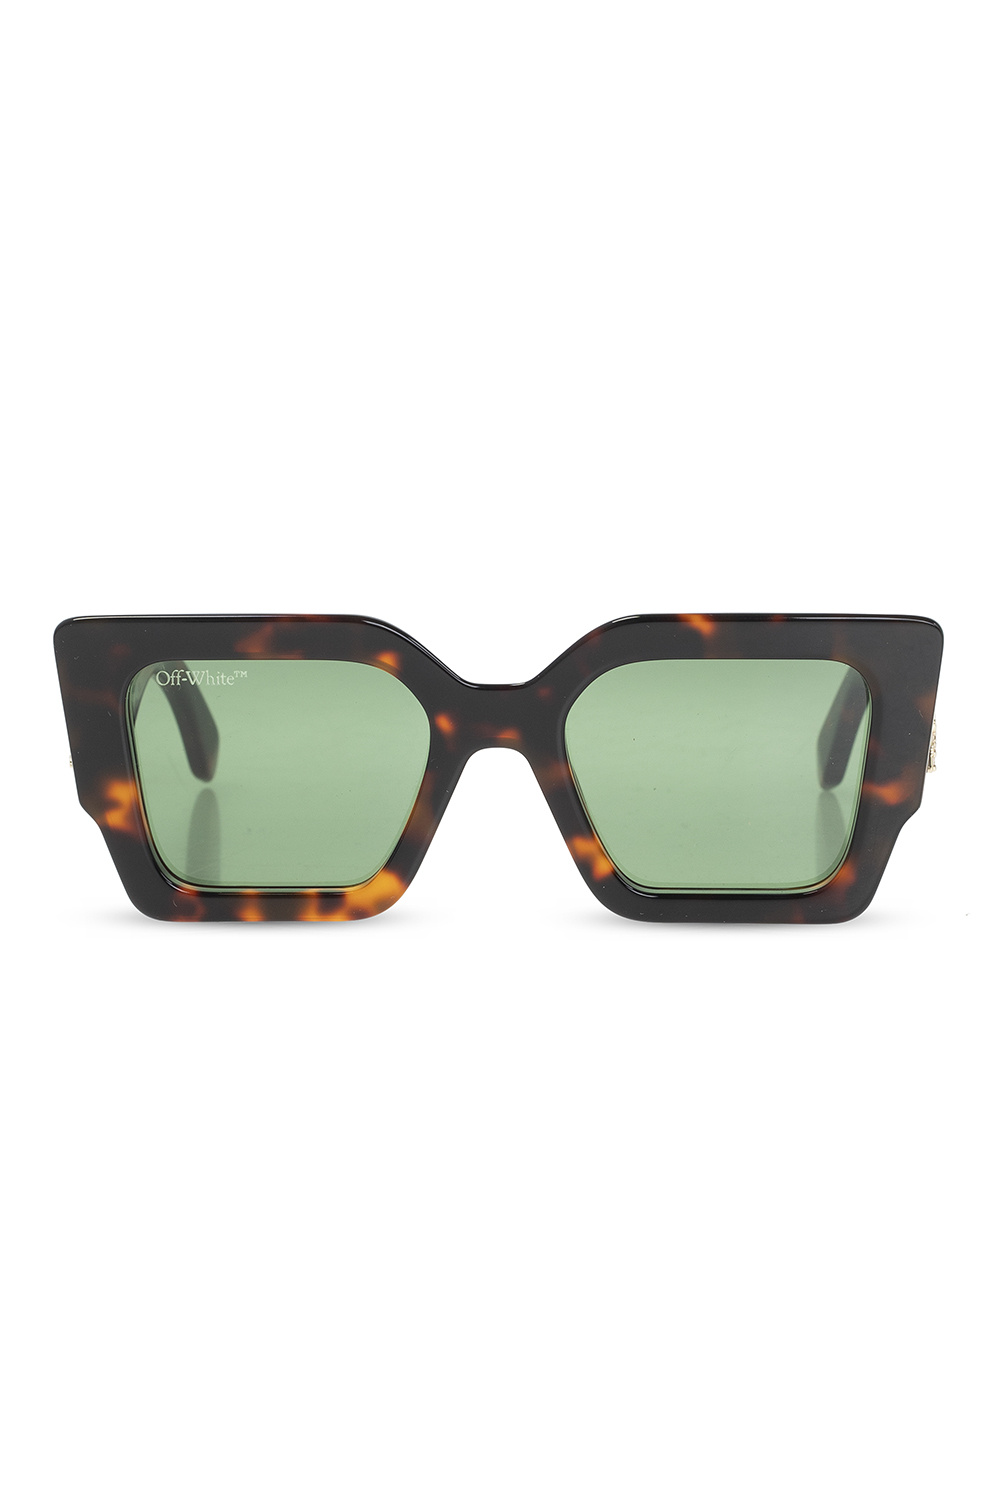 Off-White vava eyewear tinted aviator sunglasses item